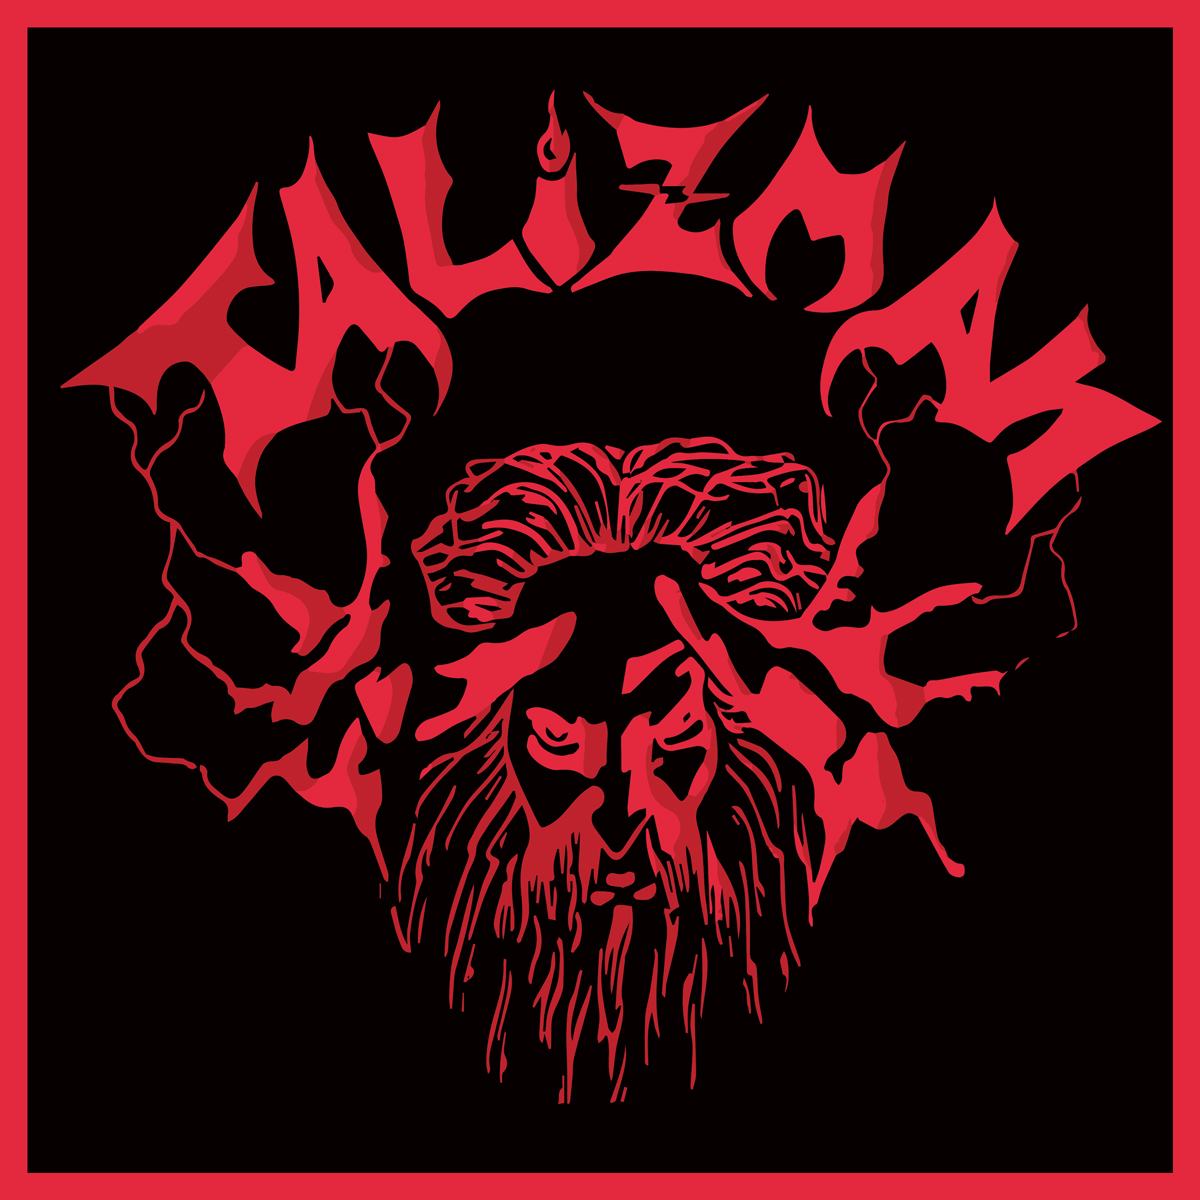 Cavalera Conspiracy - Metal Storm